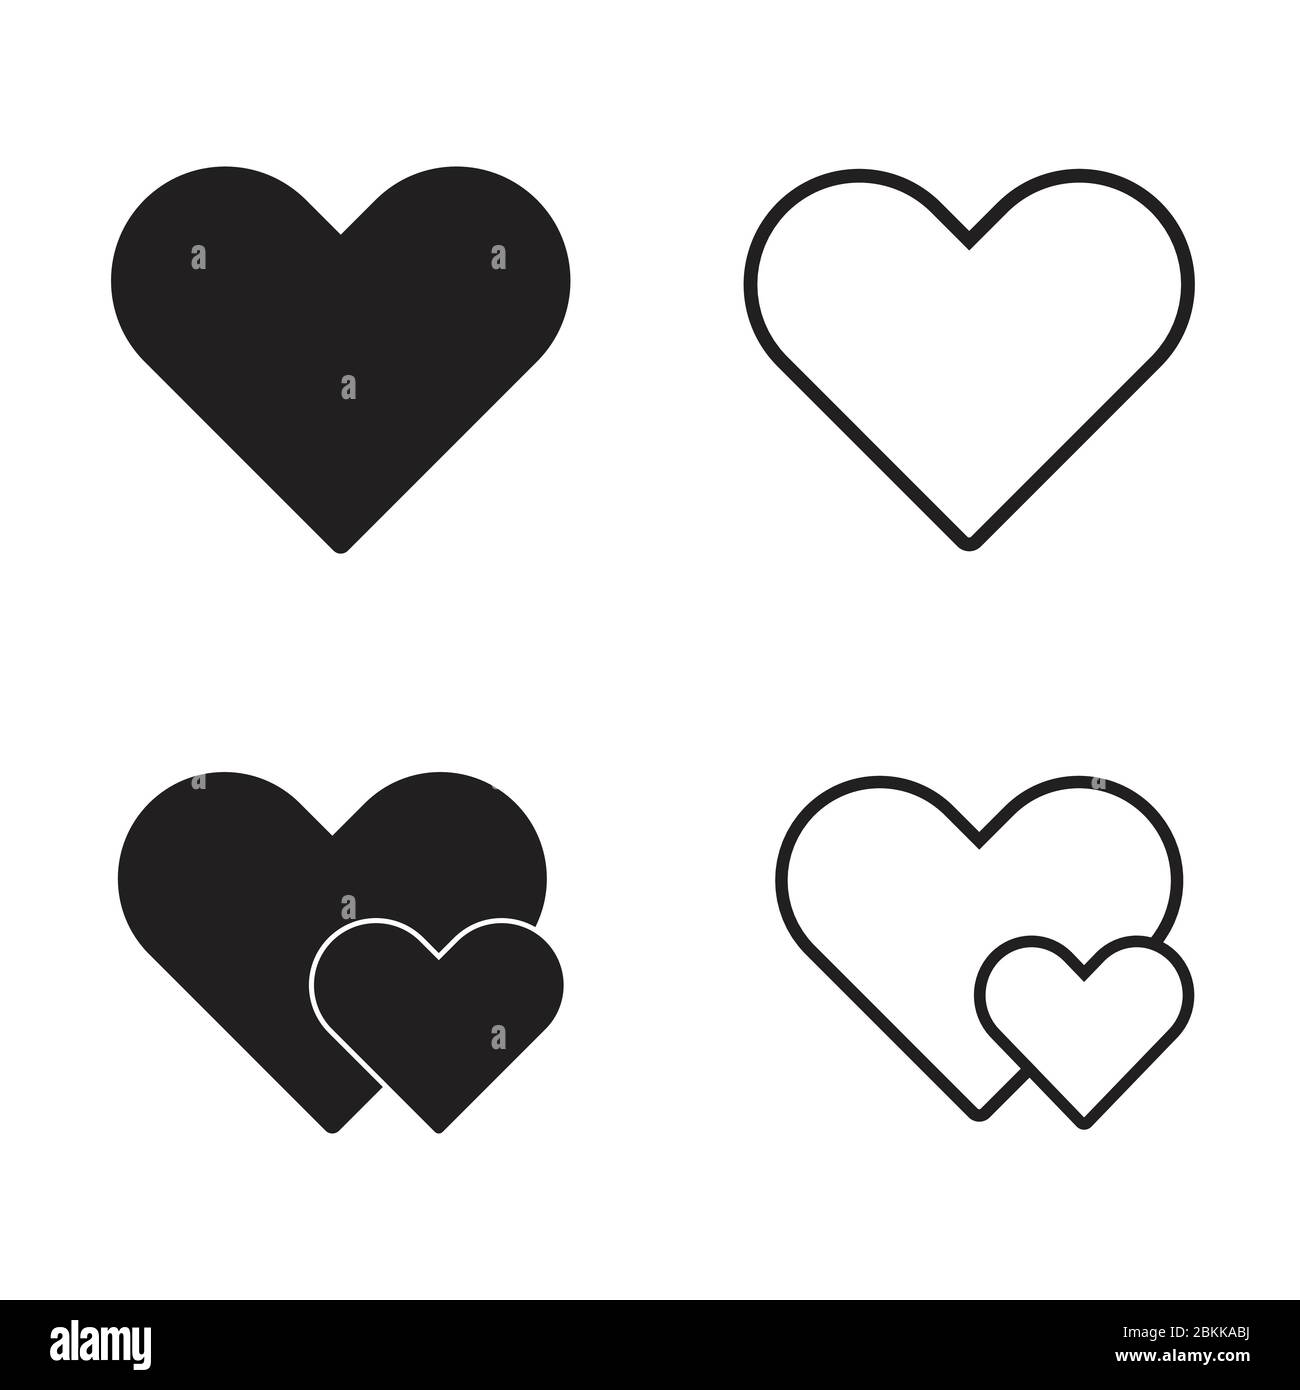 https://c8.alamy.com/comp/2BKKABJ/heart-shape-a-set-of-four-different-heart-love-shapes-isolated-on-a-white-background-eps-vector-2BKKABJ.jpg